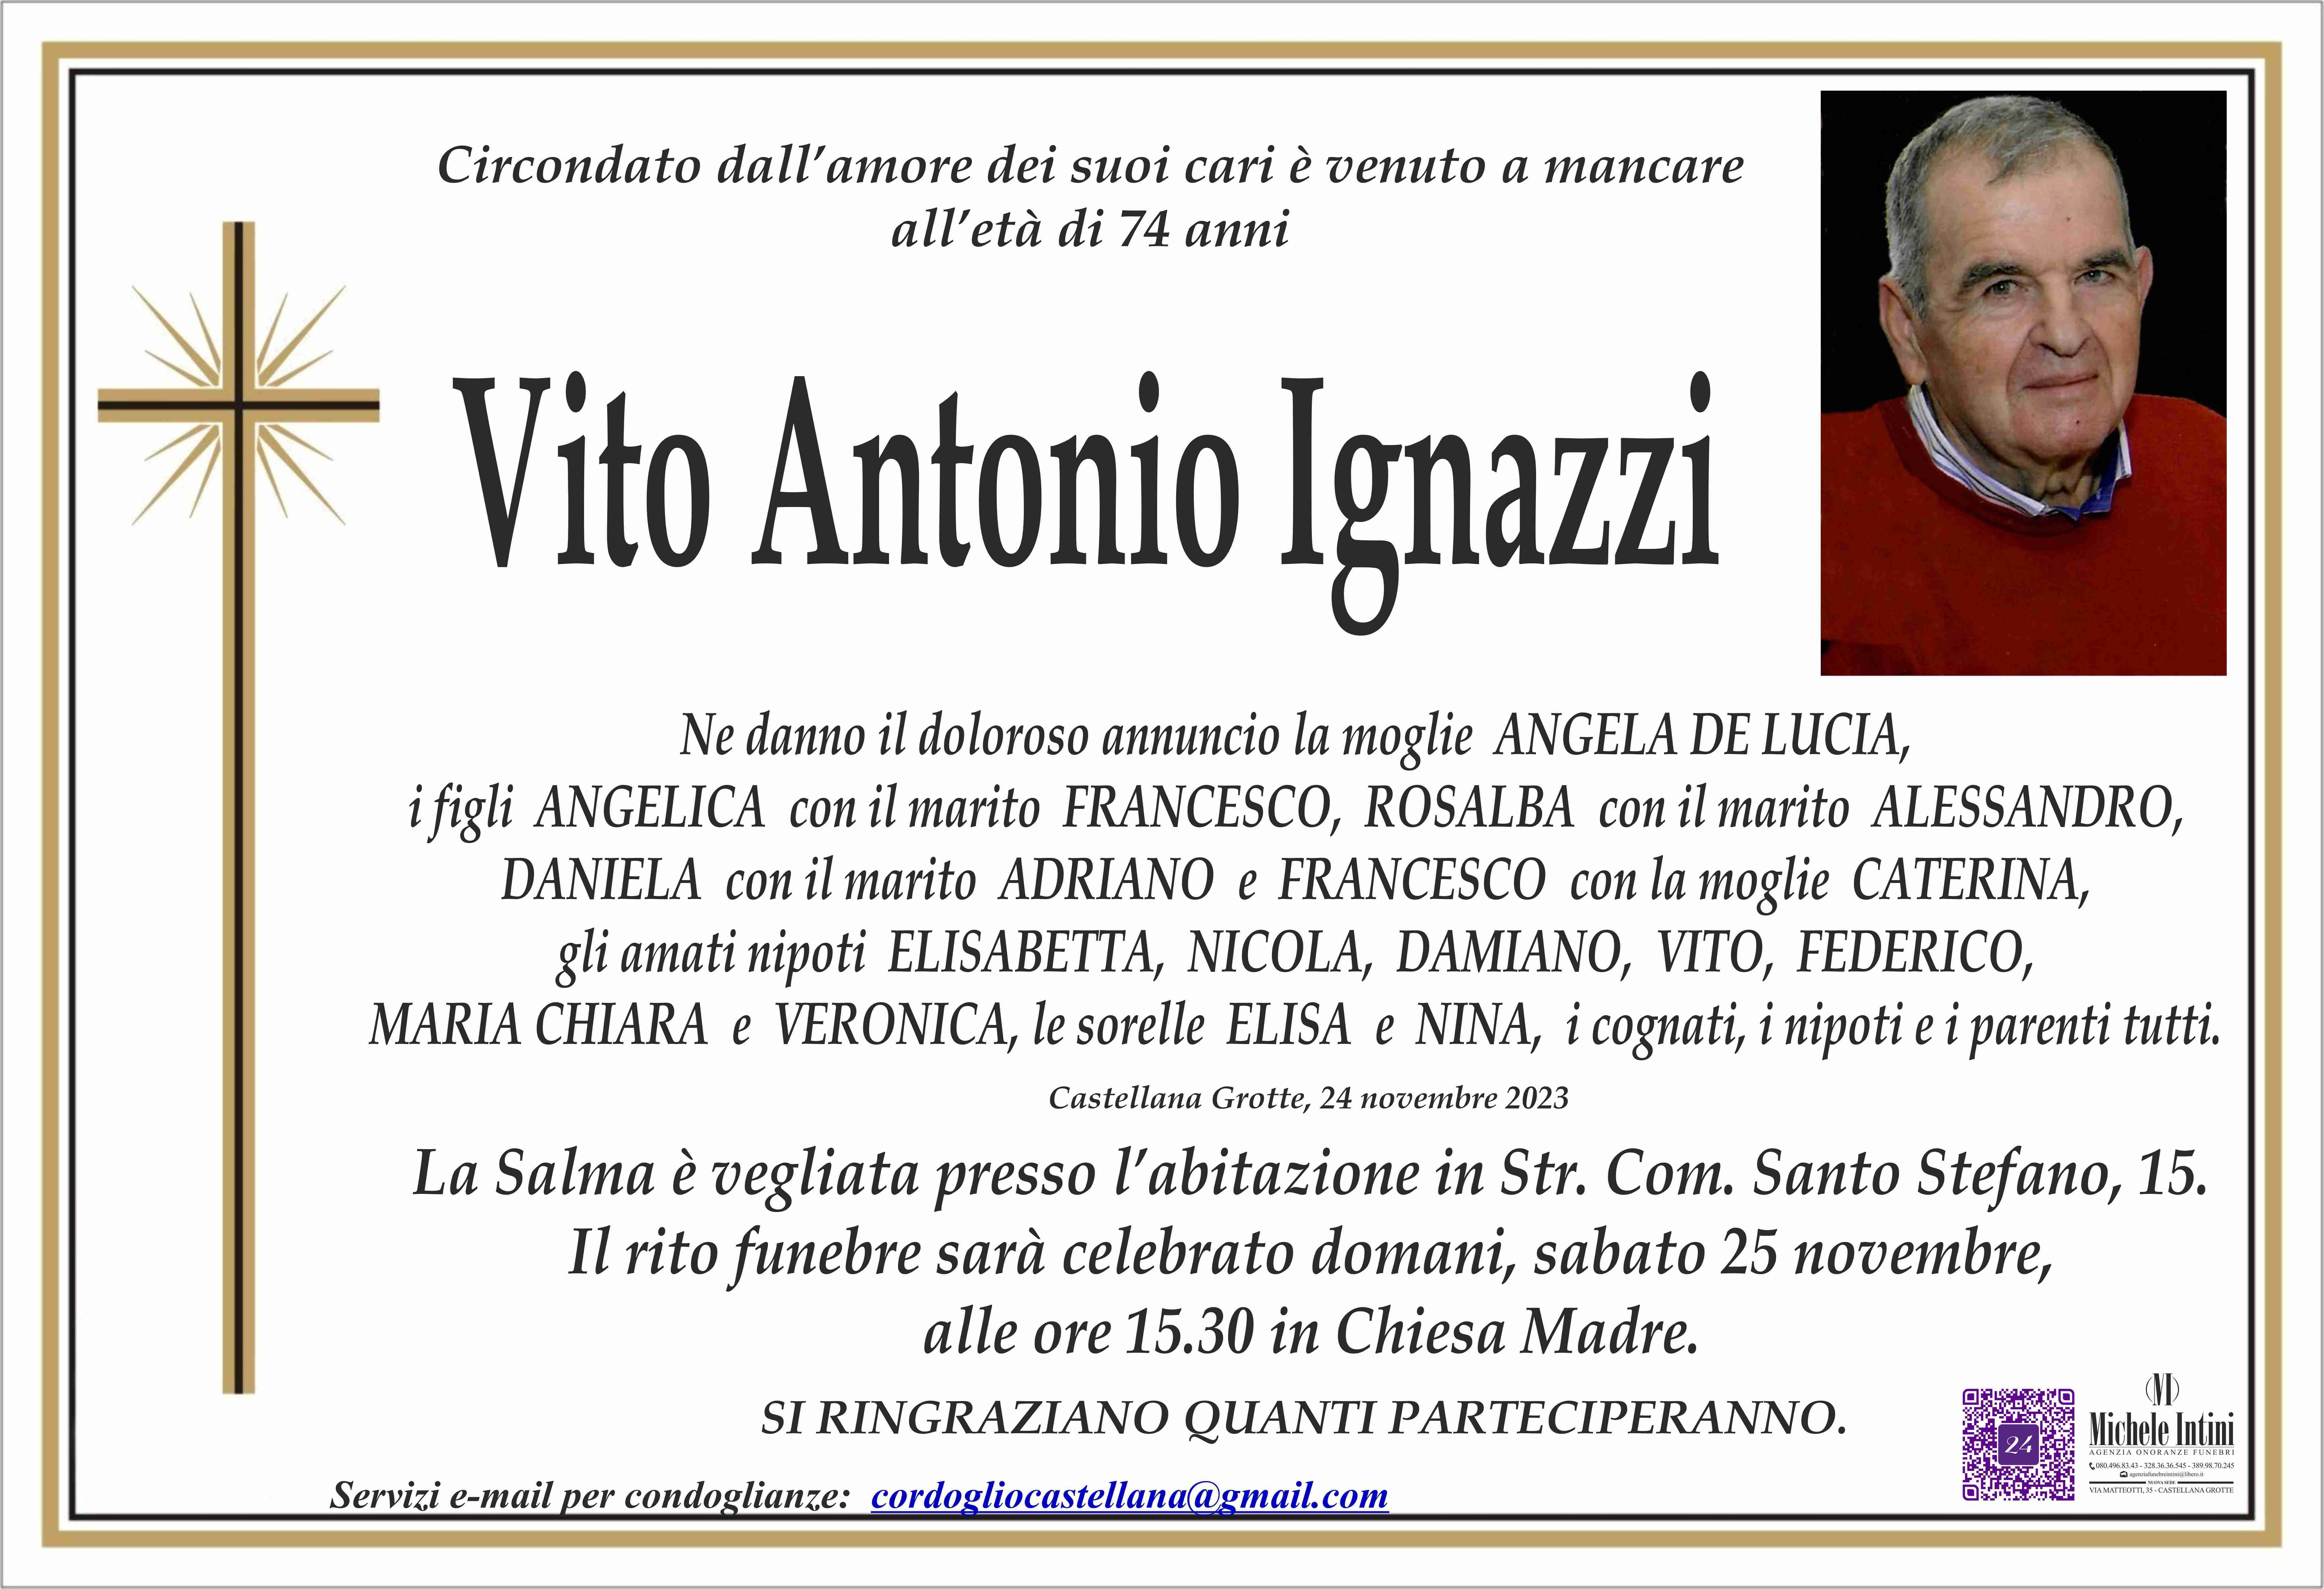 Vito Antonio Ignazzi